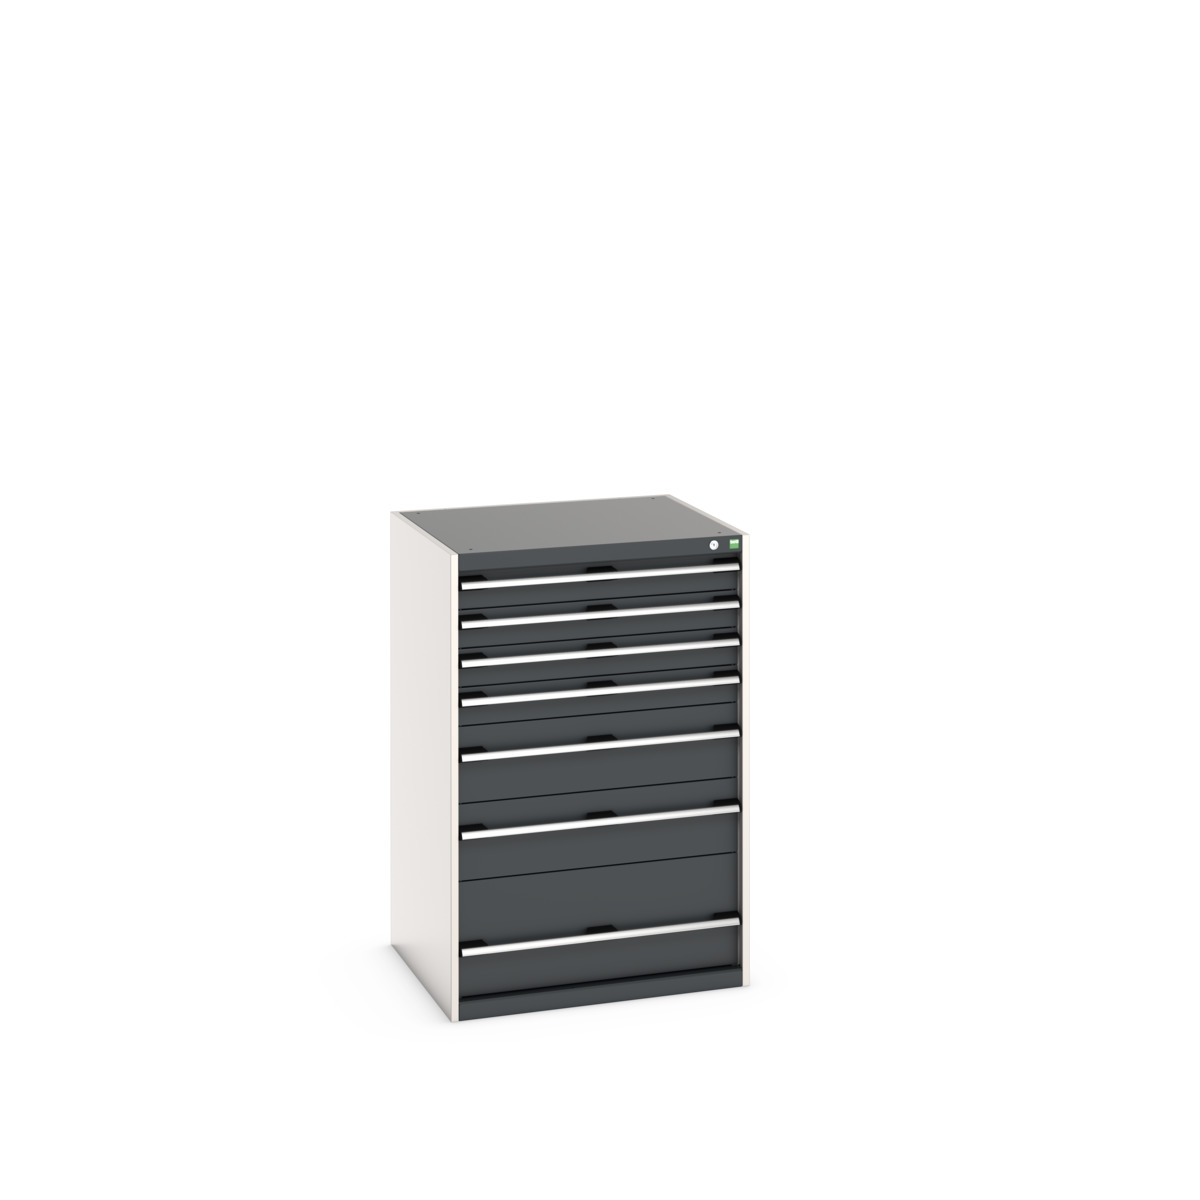 40028032. - cubio drawer cabinet 